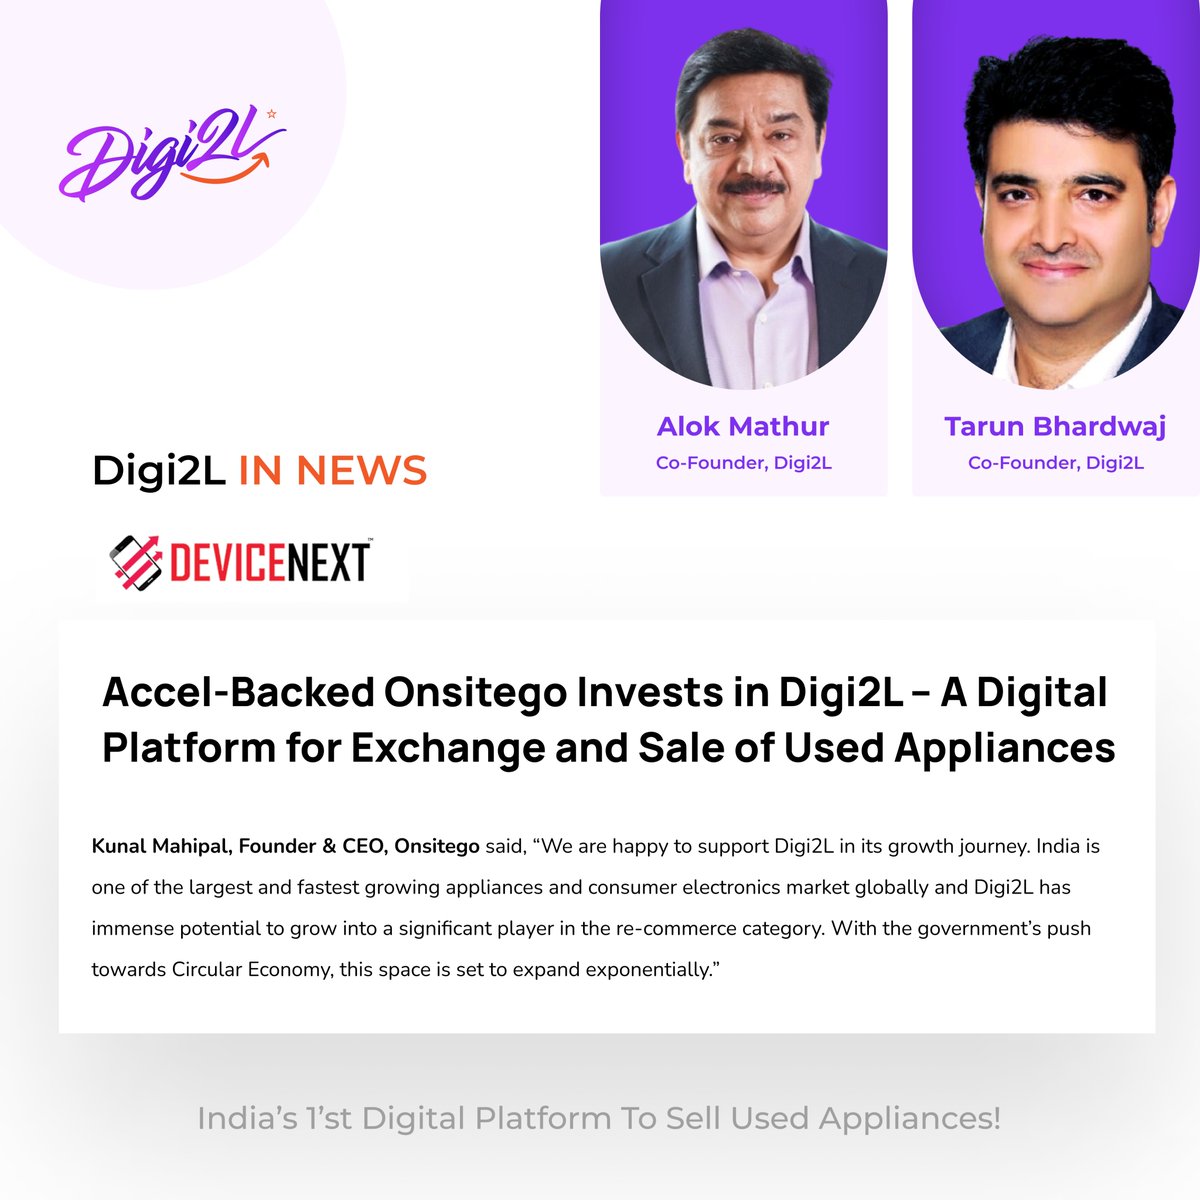 Digi2L in the News!  @DeviceNXT 

devicenext.com/onsitego-inves…
#usedappliances #refurbished #sustainability #digi2l #india #bestplatform #selloldappliances #technology #devicenext